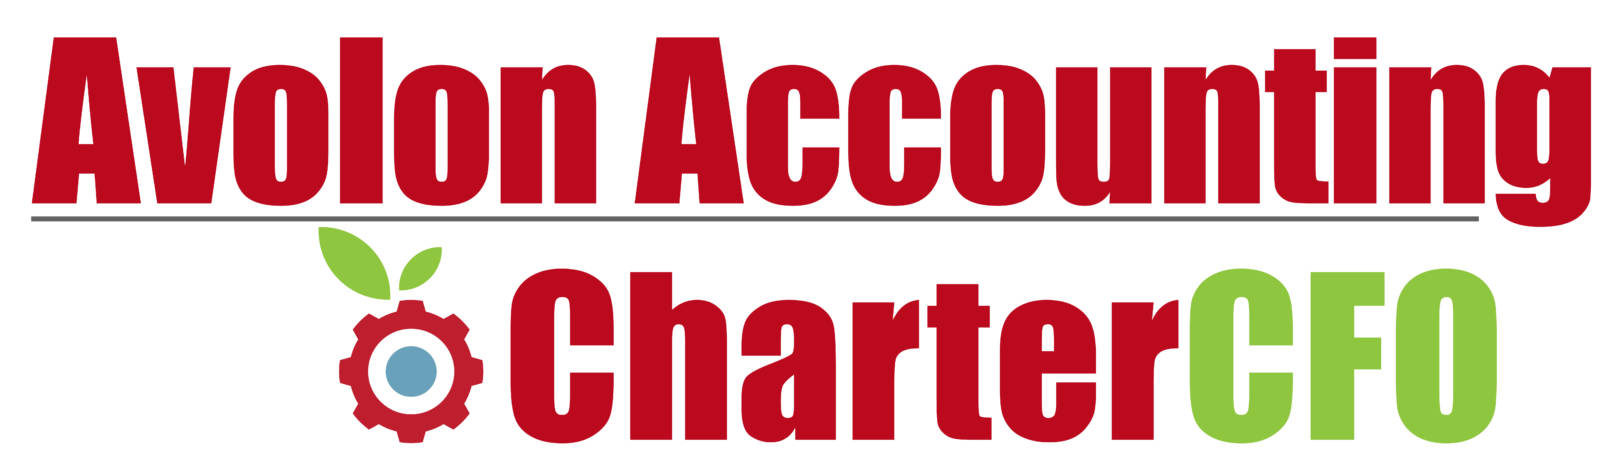 Avolon Accounting & Charter CFO